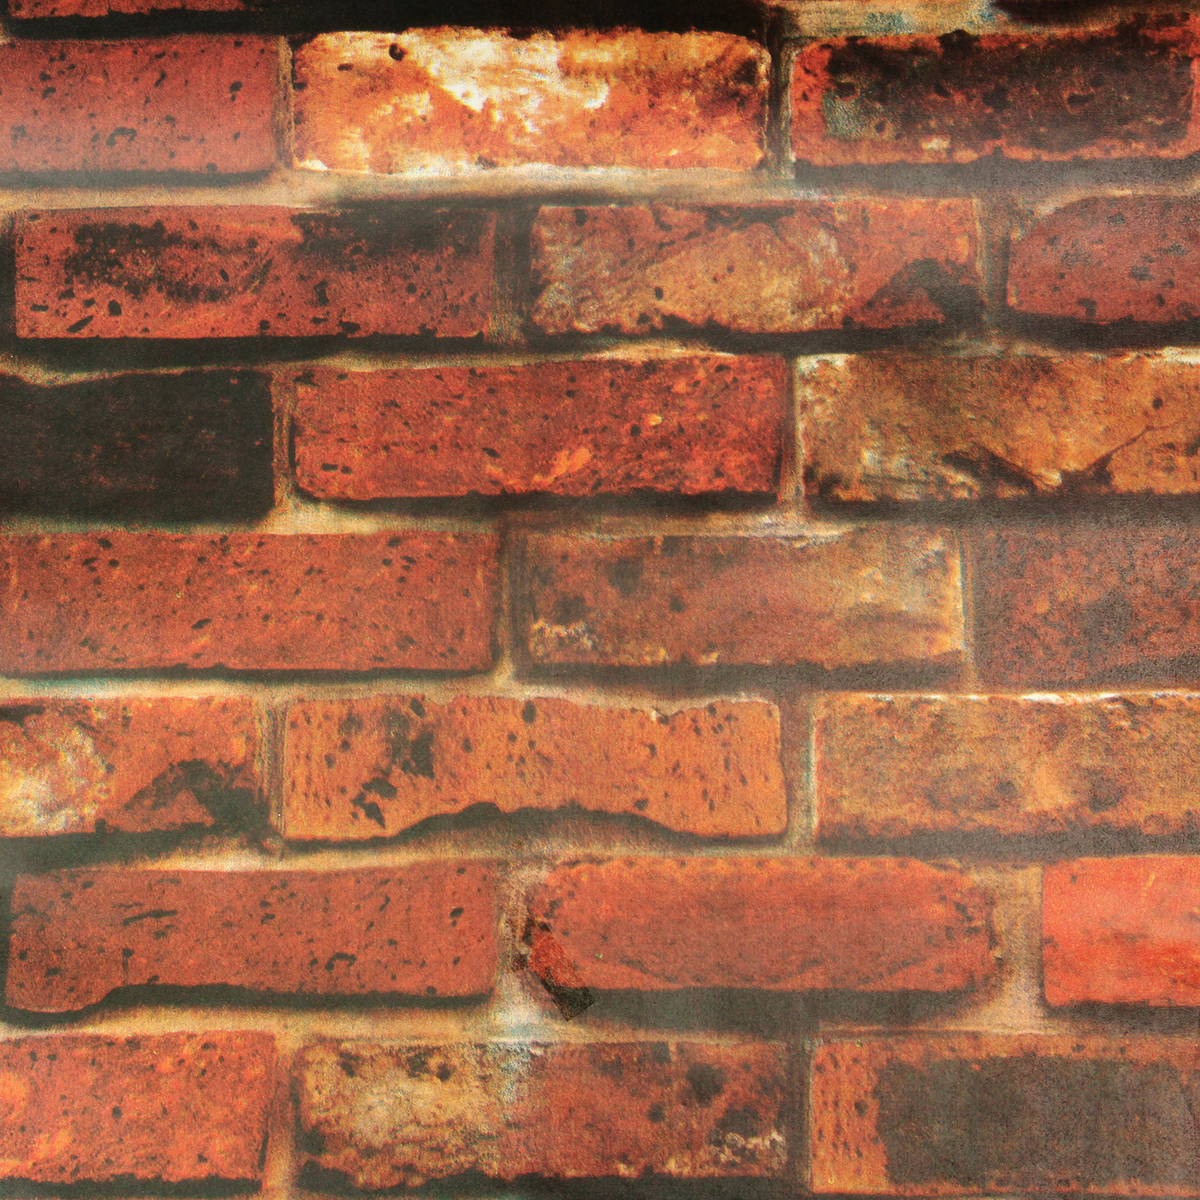 adhesive brick wallpaper,brick,brickwork,wall,pattern,bricklayer